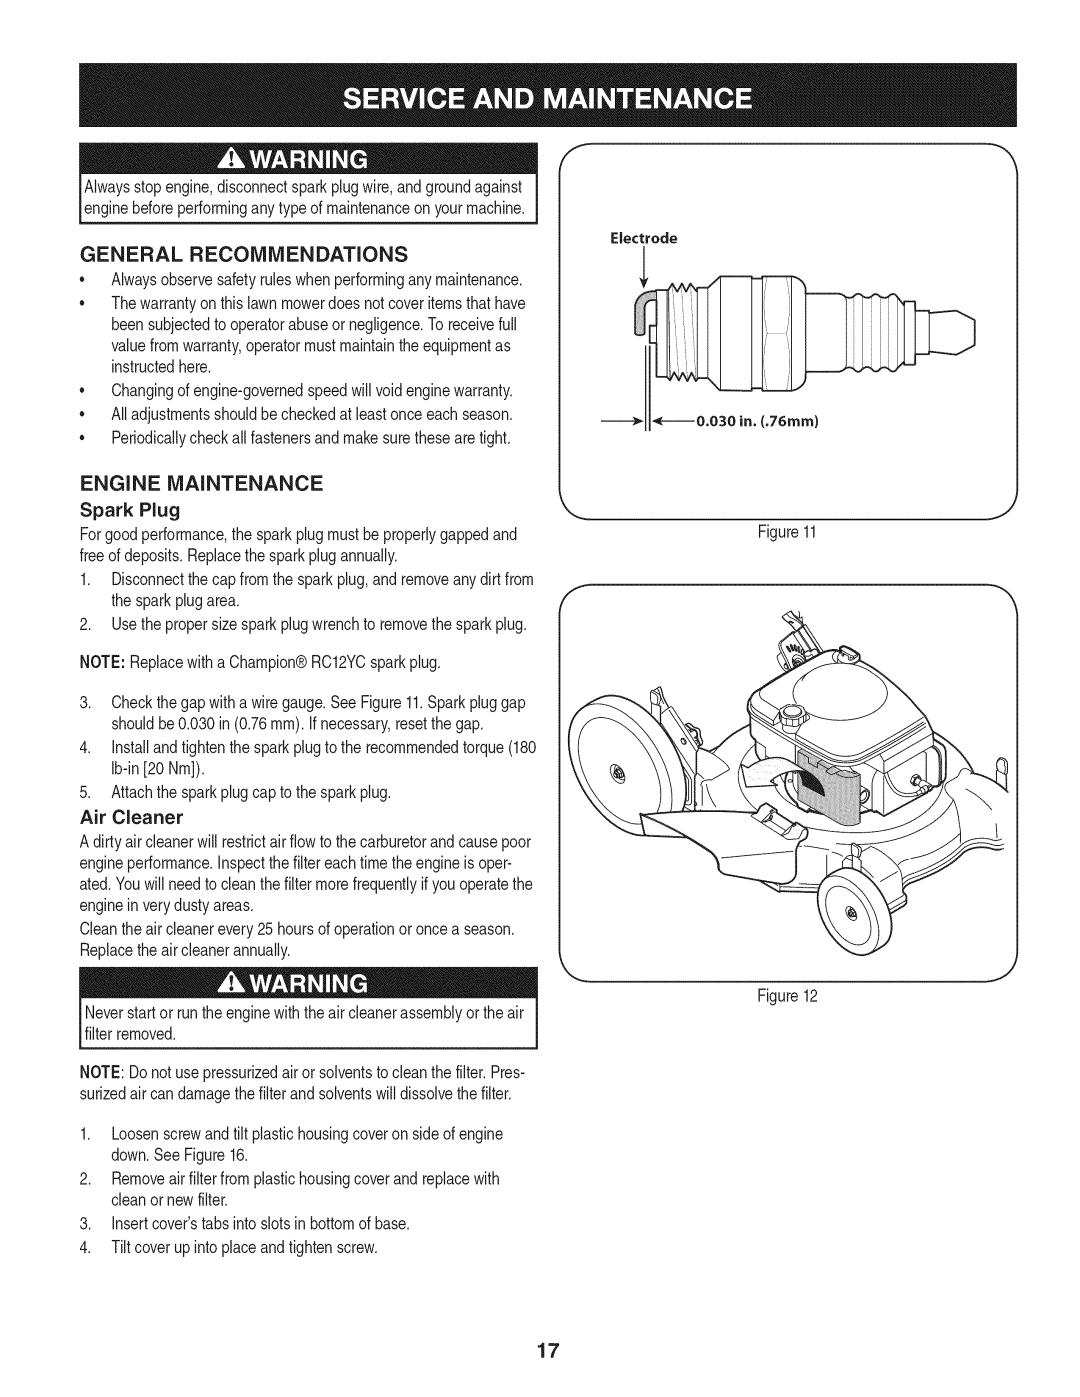 Craftsman 247.38528 manual General Recommendations, Engine Maintenance 